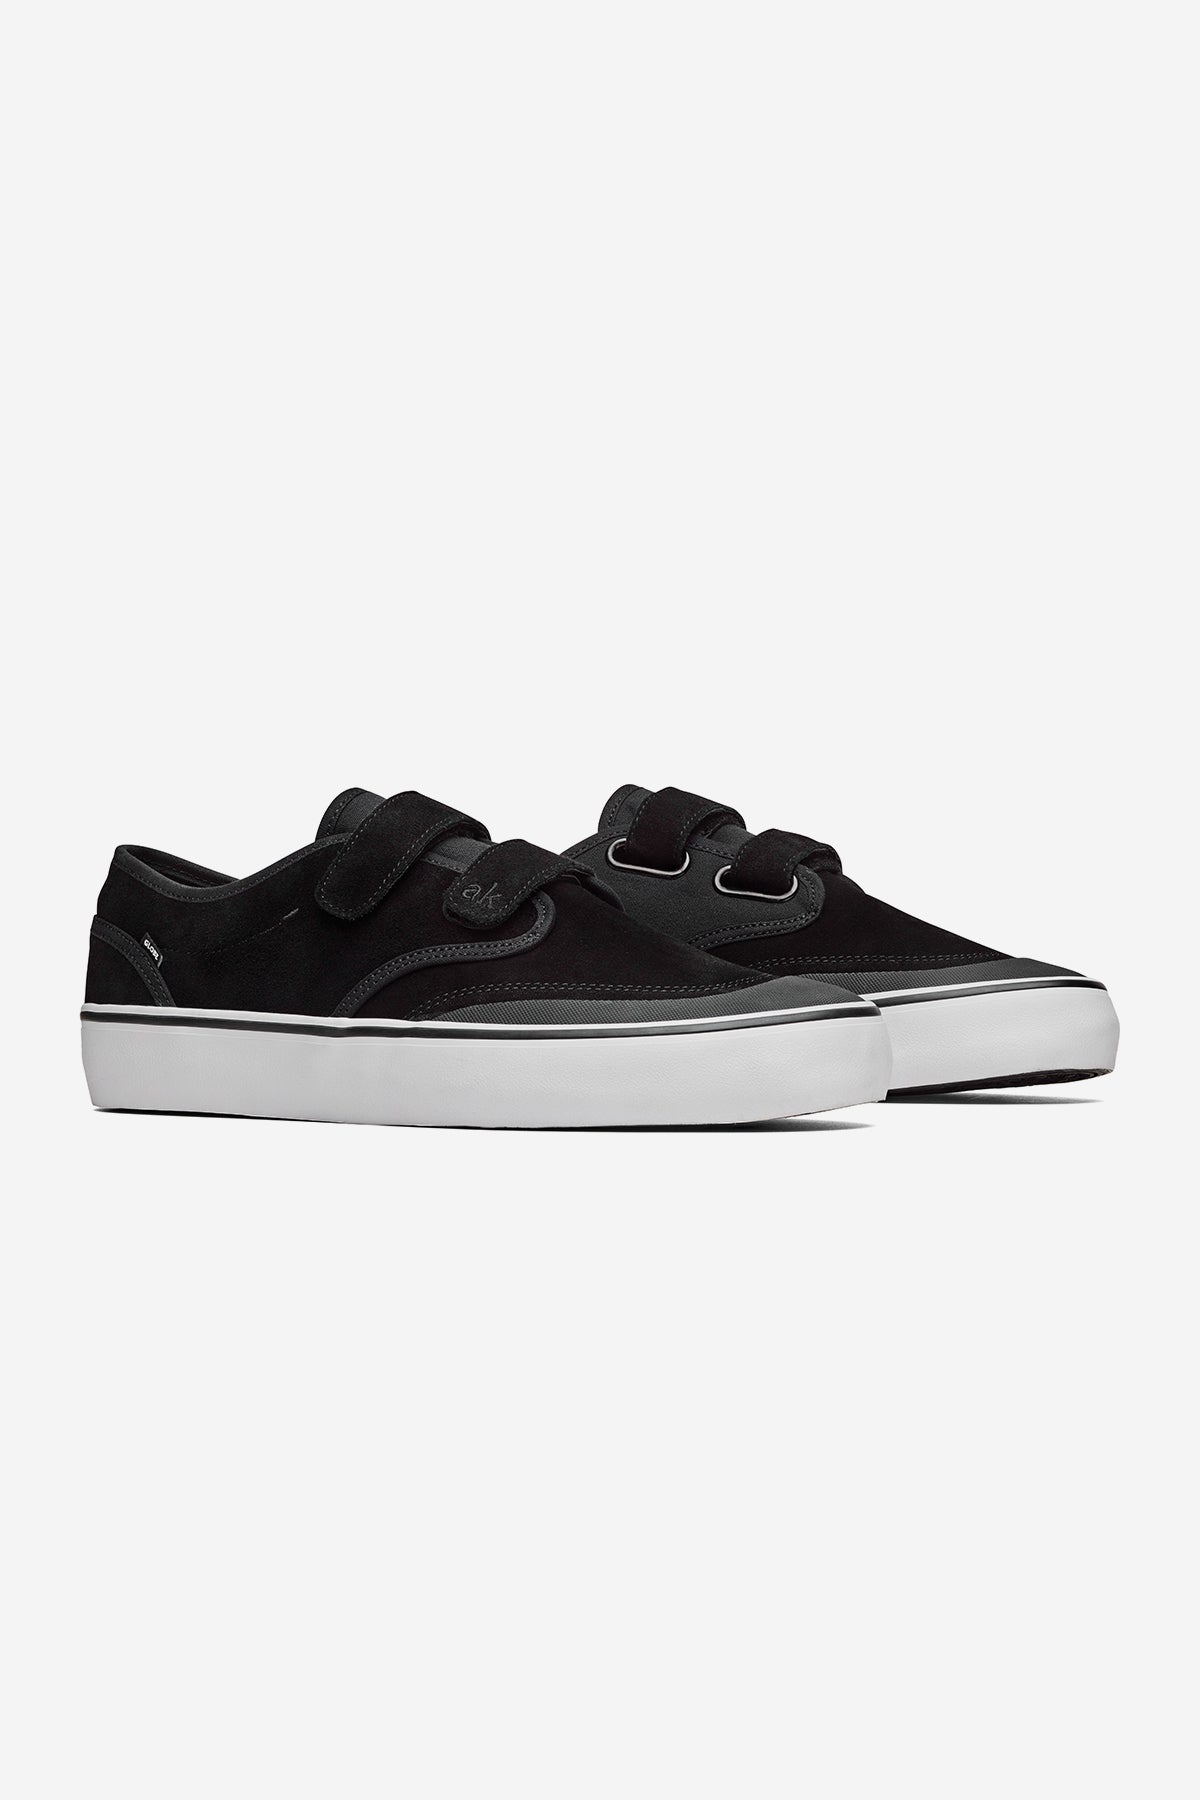 Globe - Motley Ii Strap - Black/White - Skate Shoes